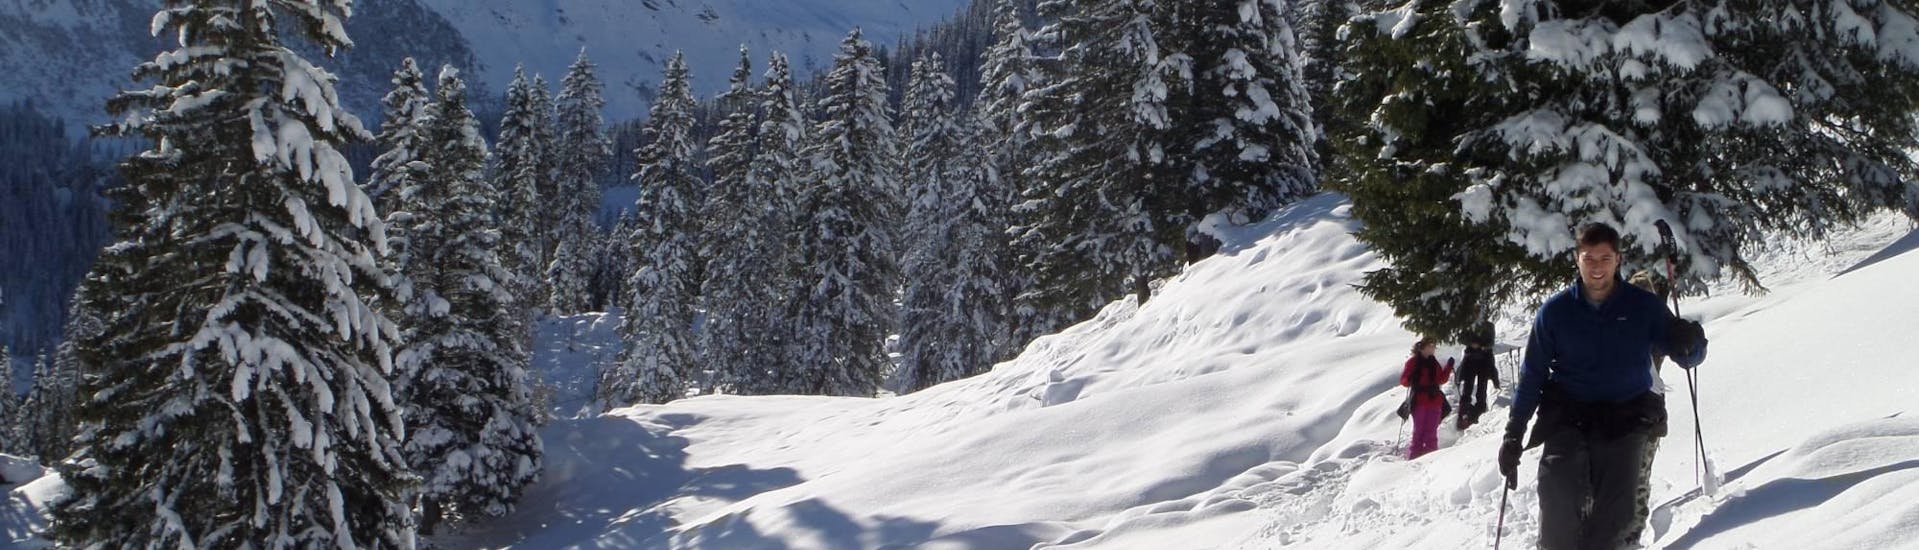 snowshoeing-tours-outdoor-interlaken7